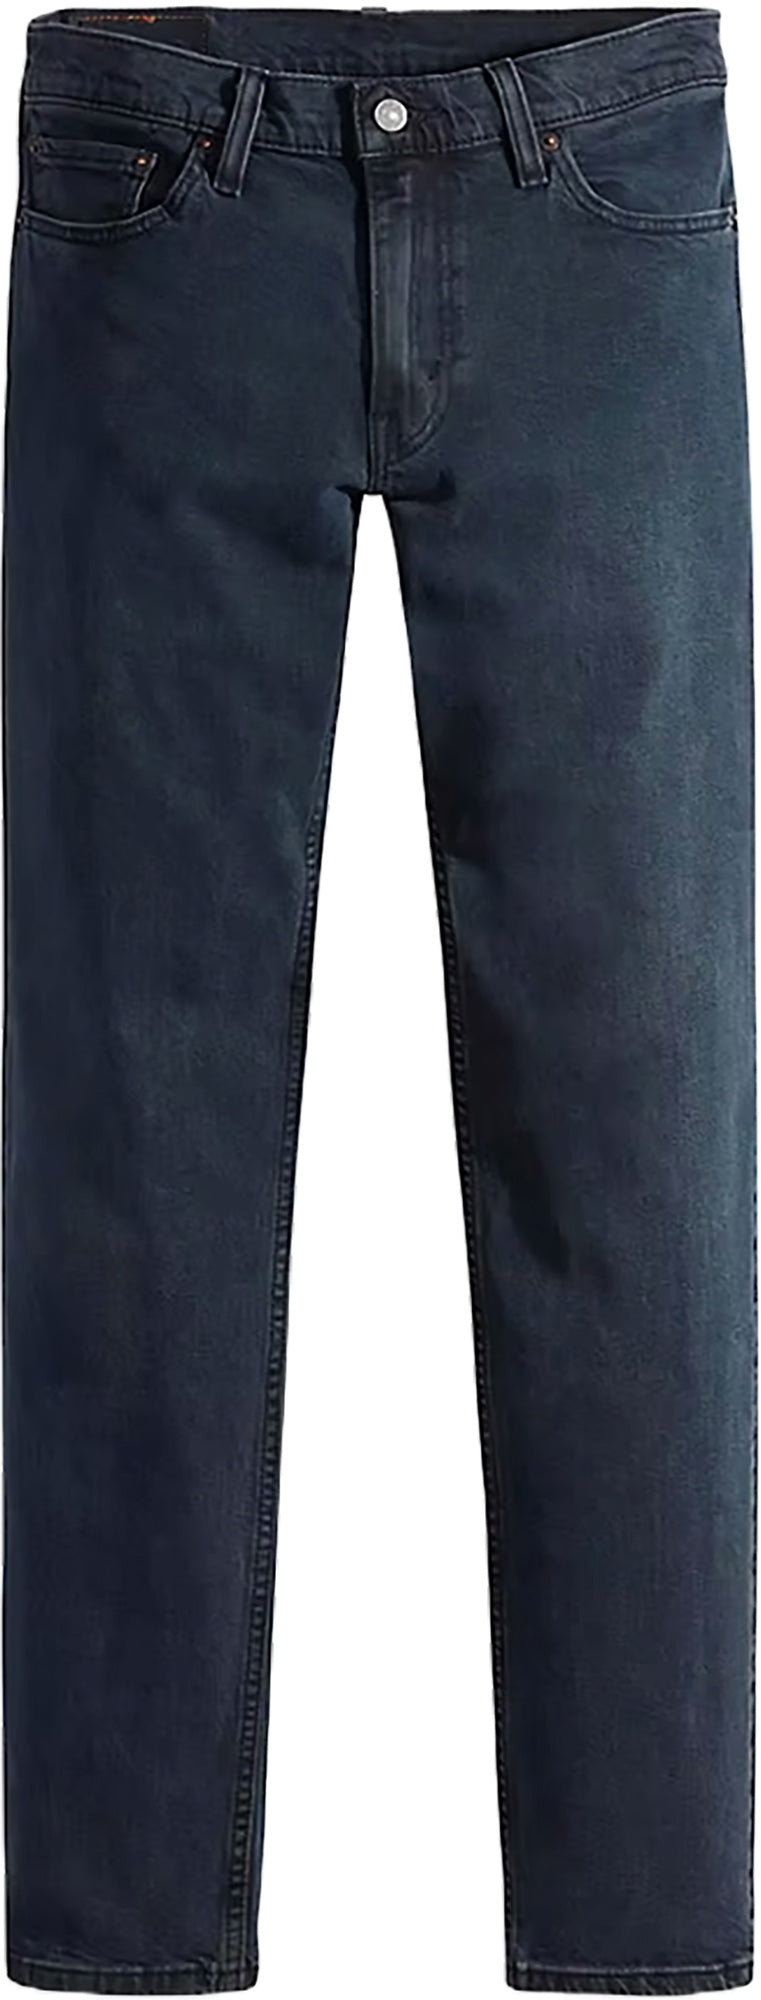 511™ Slim Fit All Seasons Men's Jeans - Medium Wash